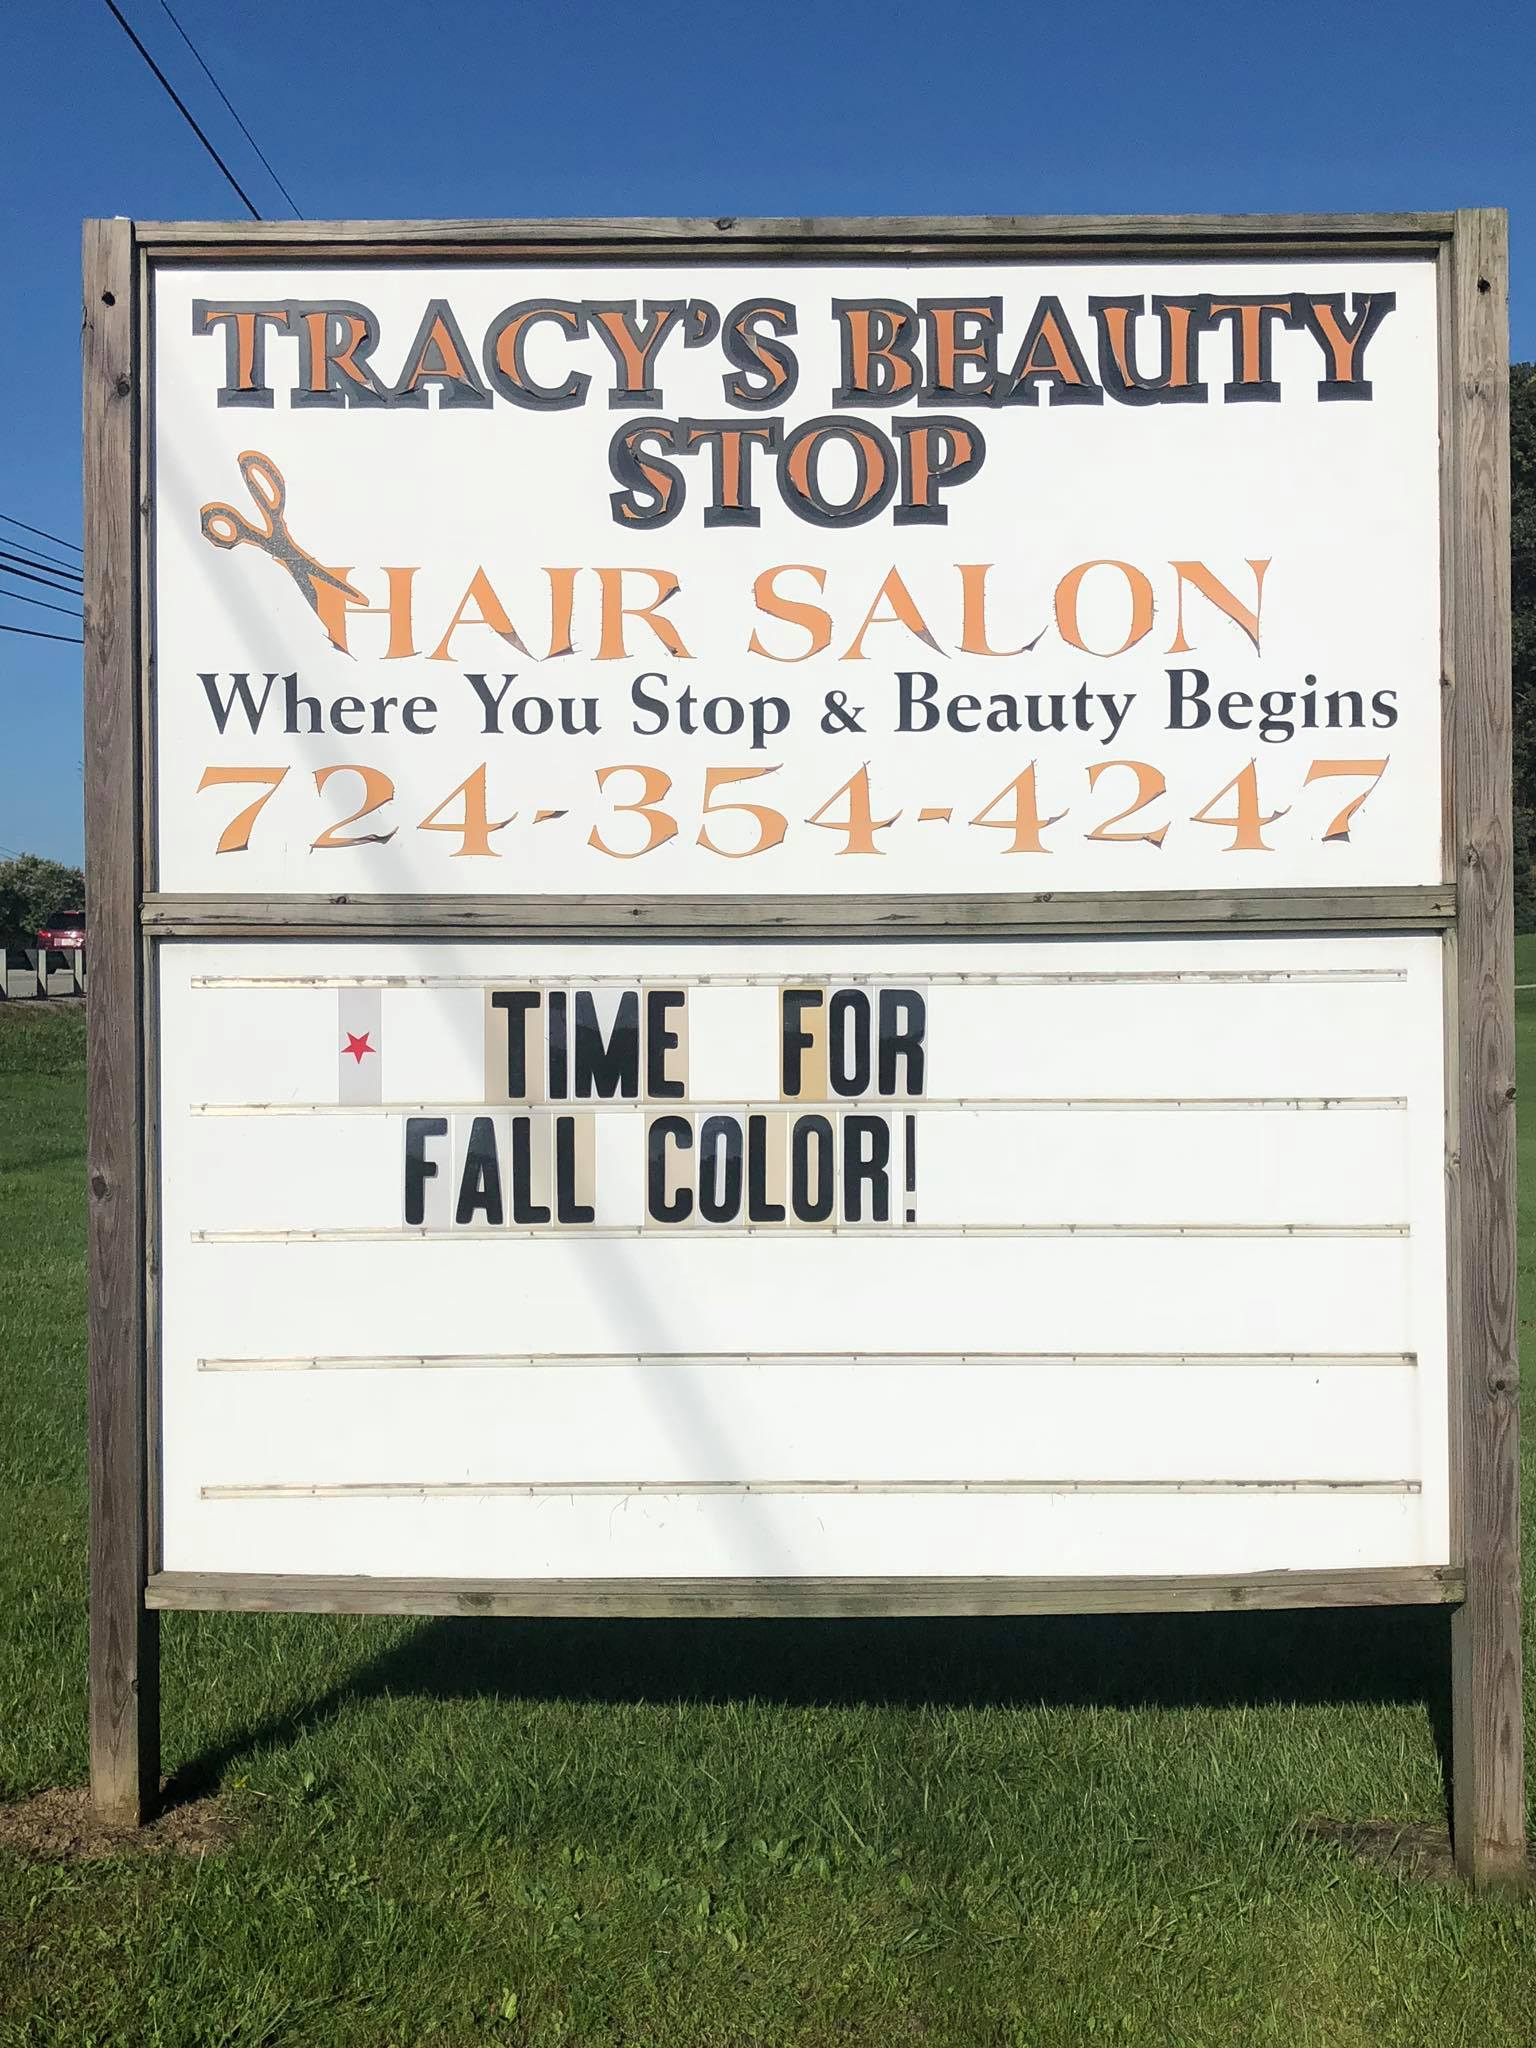 Tracy's Beauty Stop 9162 Rte 422 Hwy, Shelocta Pennsylvania 15774